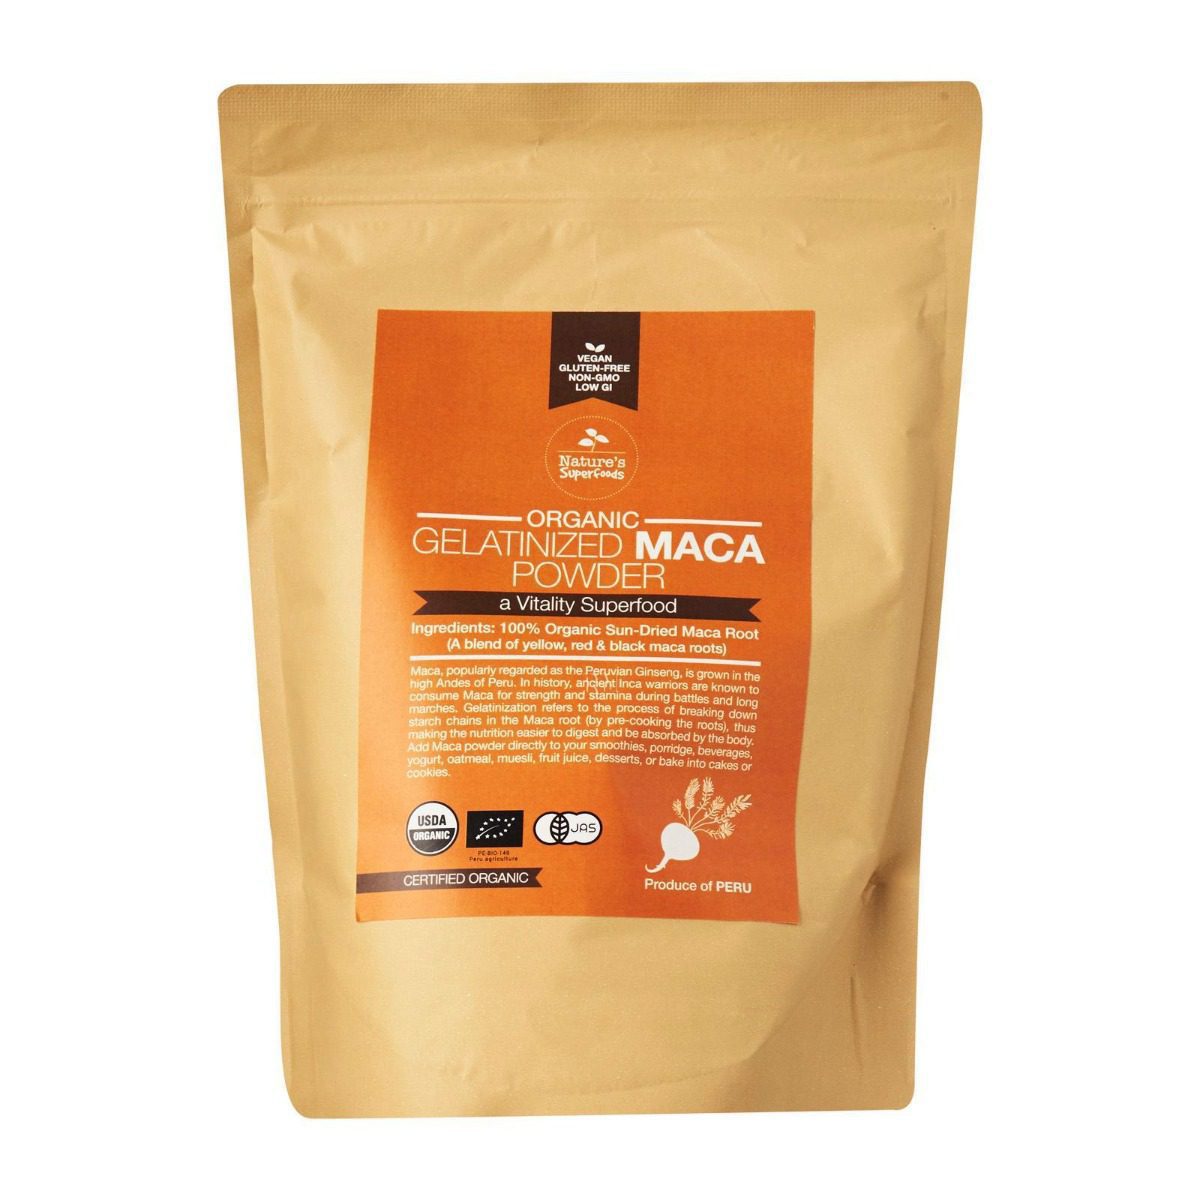 Organic Gelatinized Maca Powder 500g front